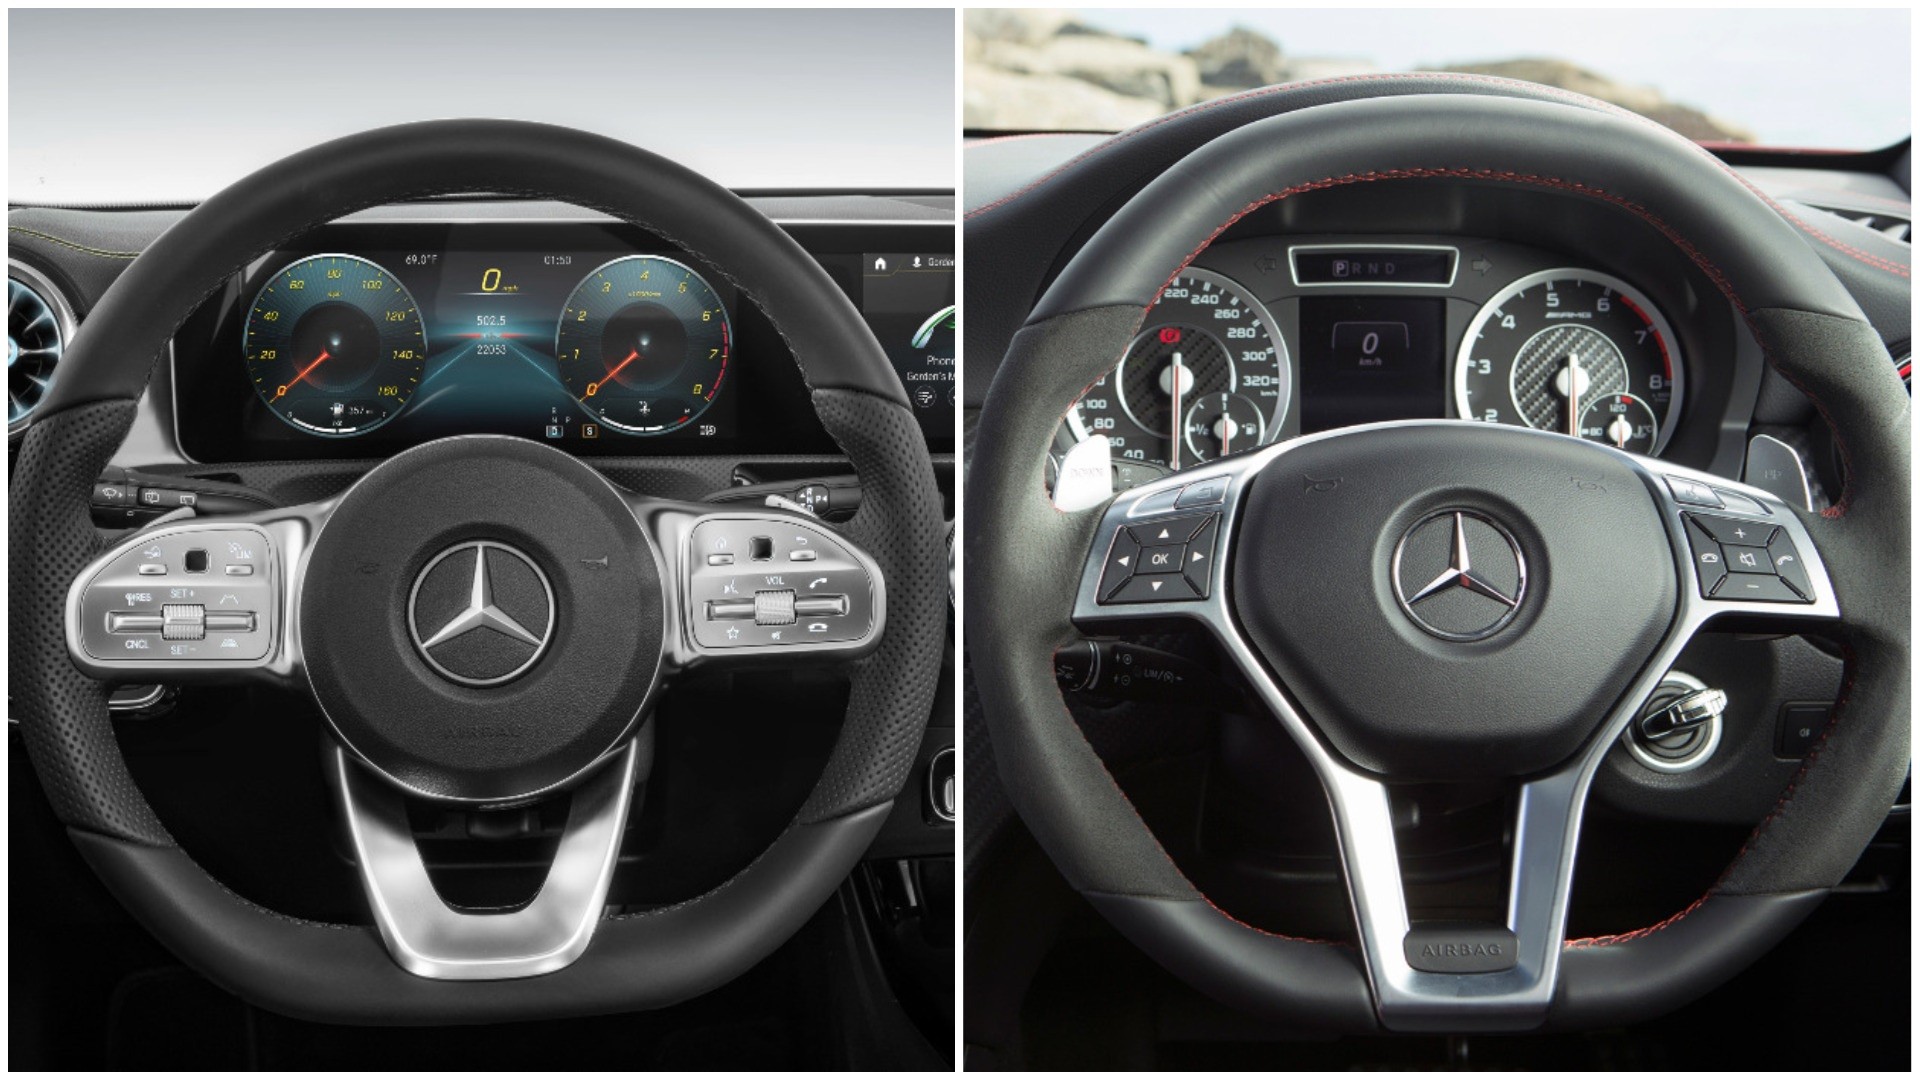 GALLERY: W177 Mercedes-Benz A-Class vs previous-gen W176 – what's